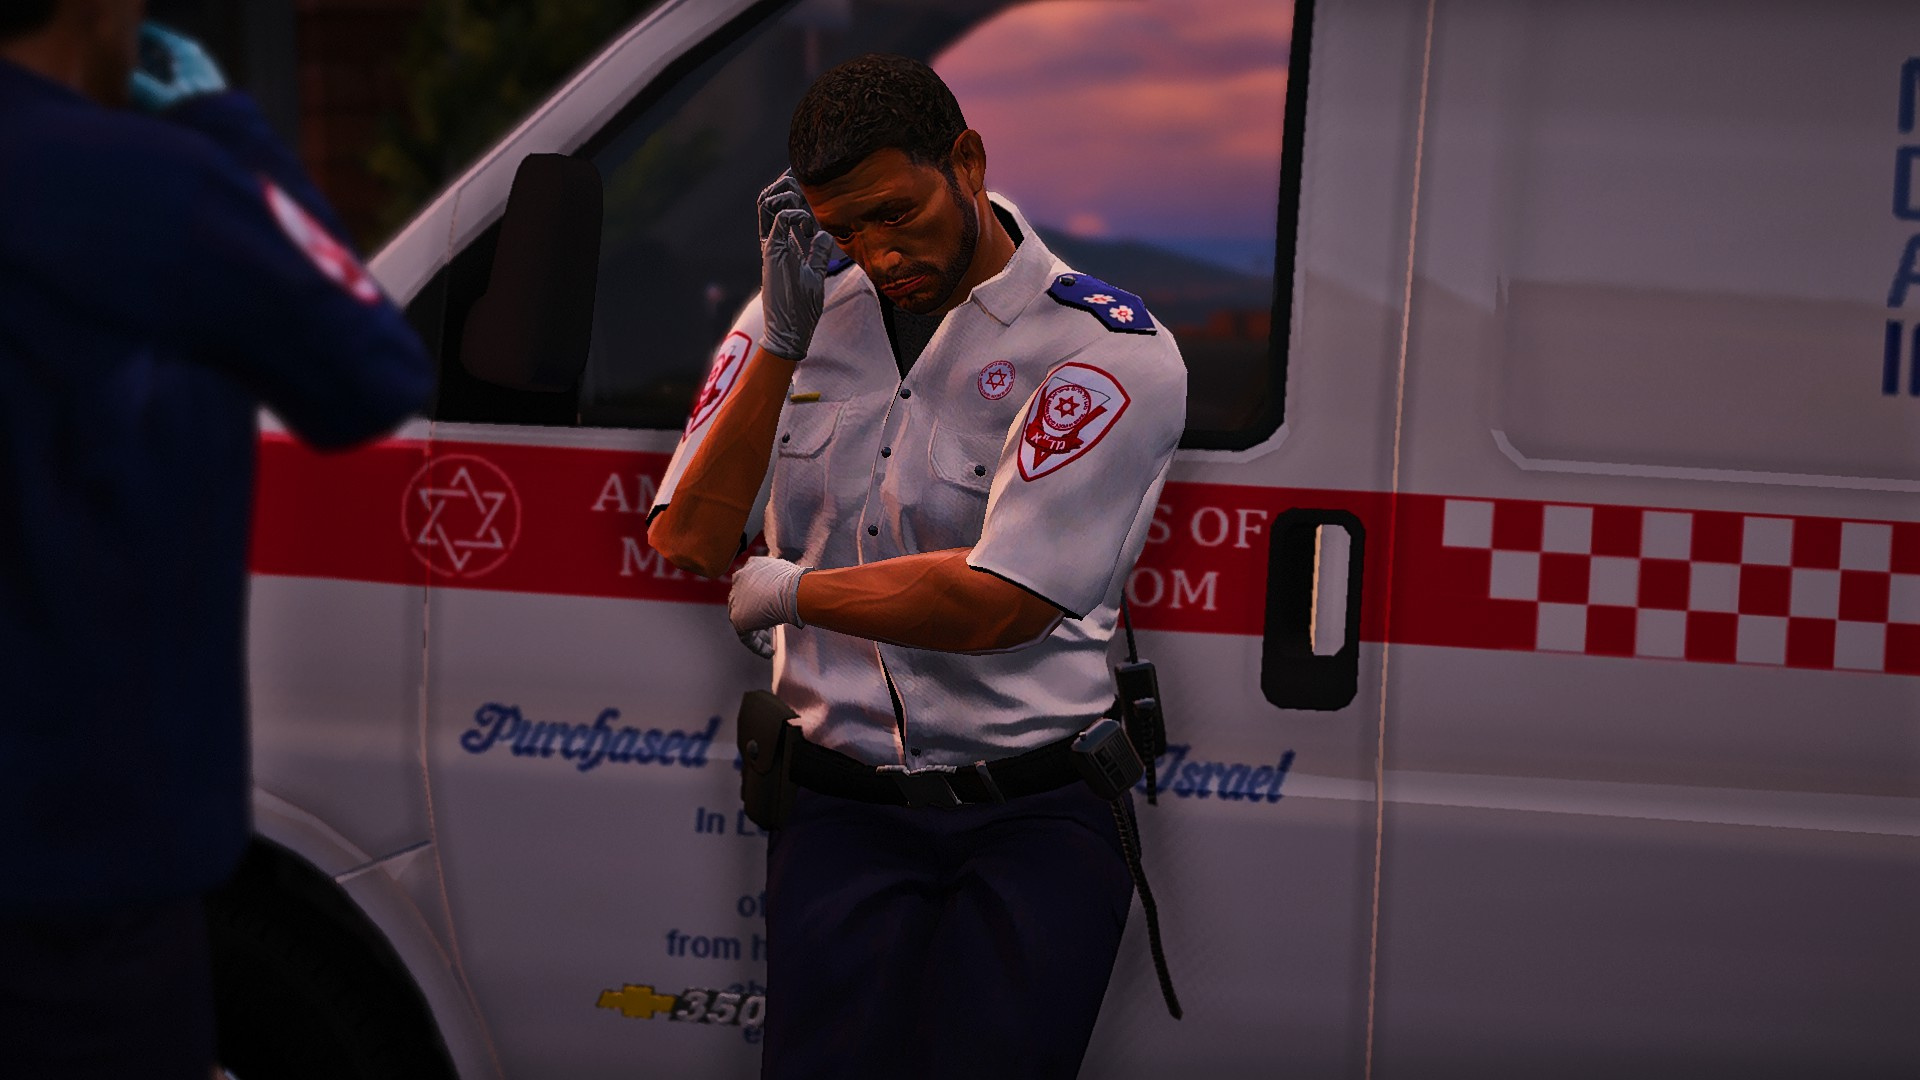 Real paramedics для gta 5 фото 3